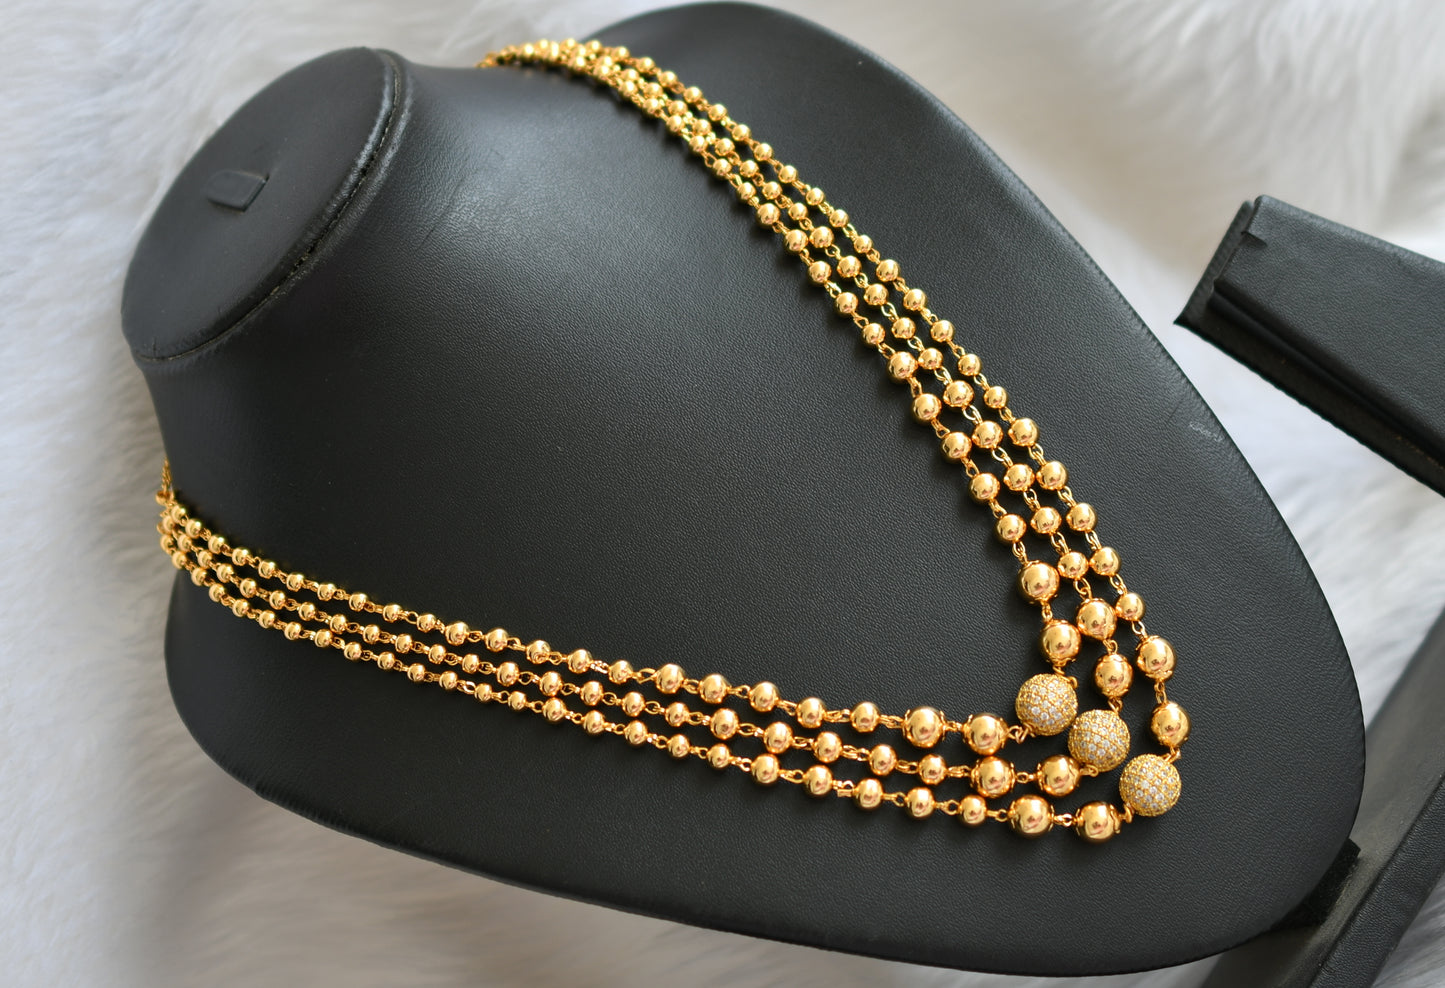 Gold tone white balls multi layer necklace set dj-39625